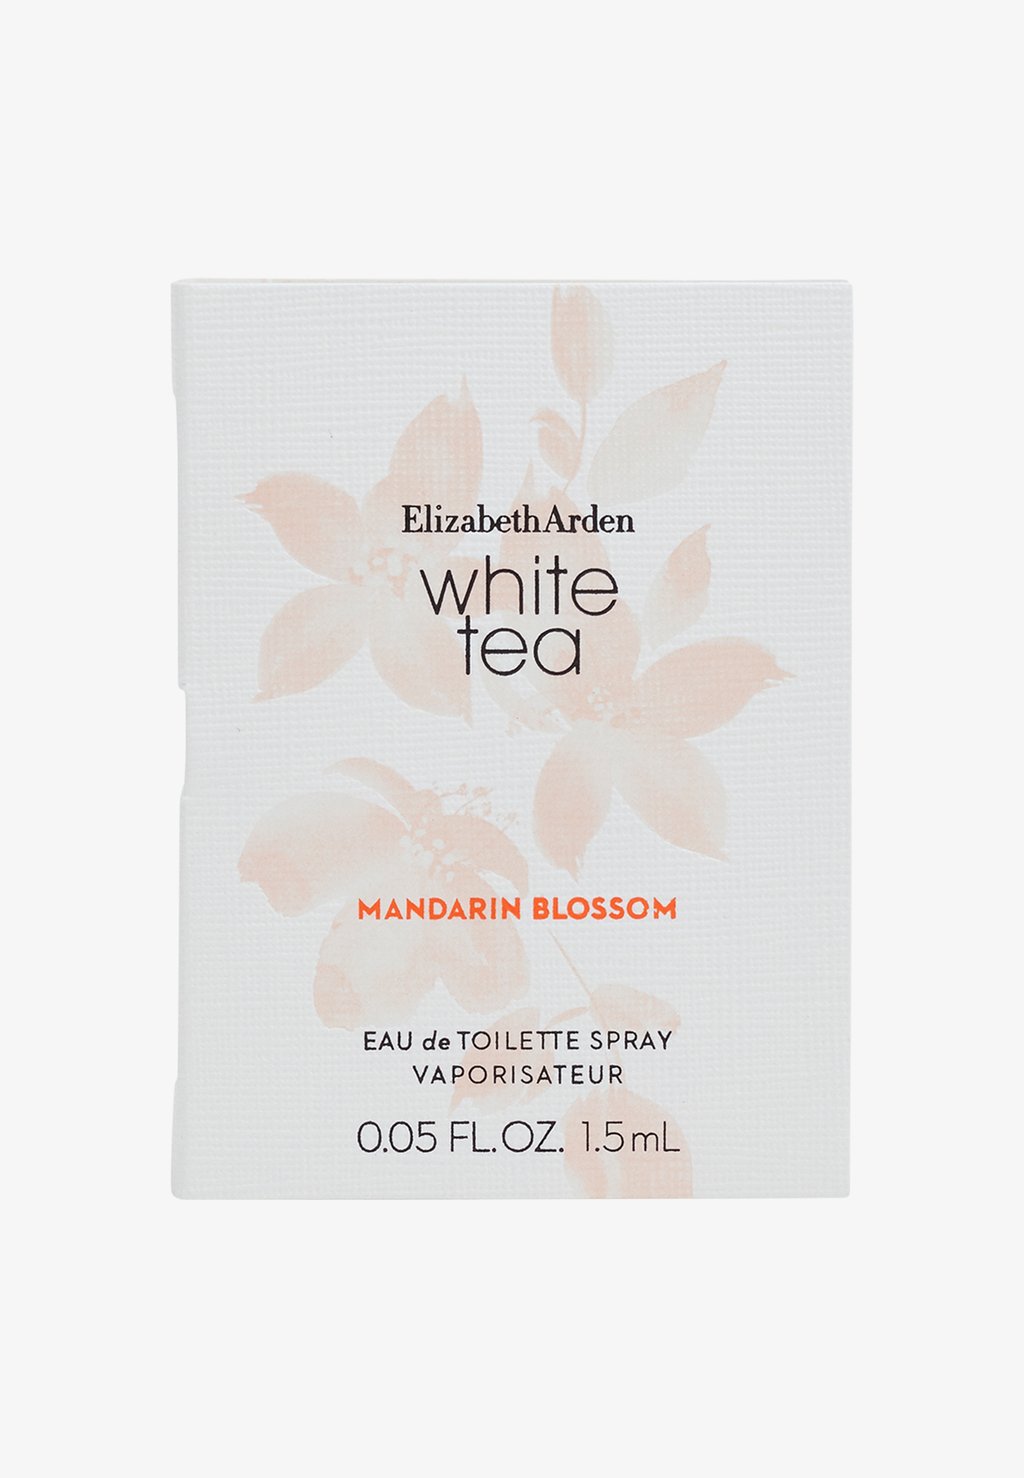 Туалетная вода White Tea Mandarin Blossom Edt Elizabeth Arden elizabeth arden туалетная вода white tea mandarin blossom 50 мл